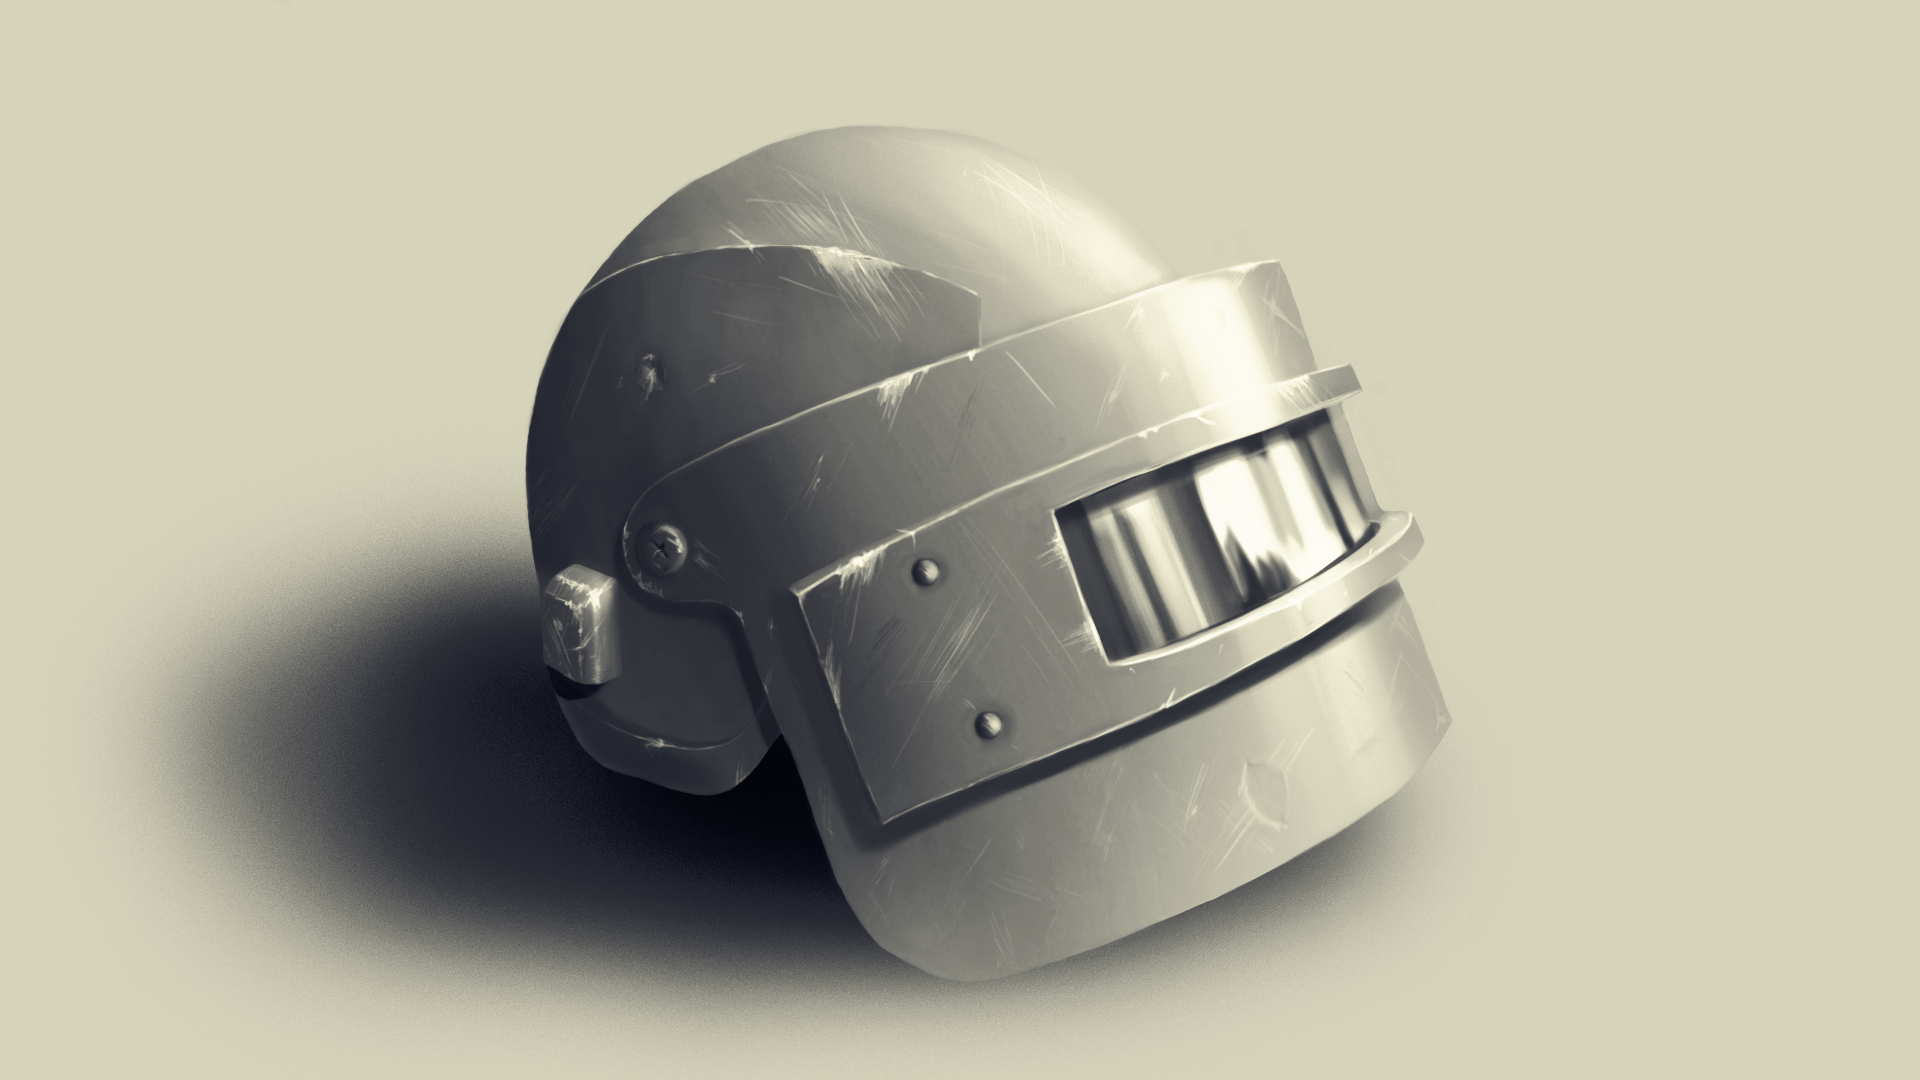 шлем инферно пубг фото 82